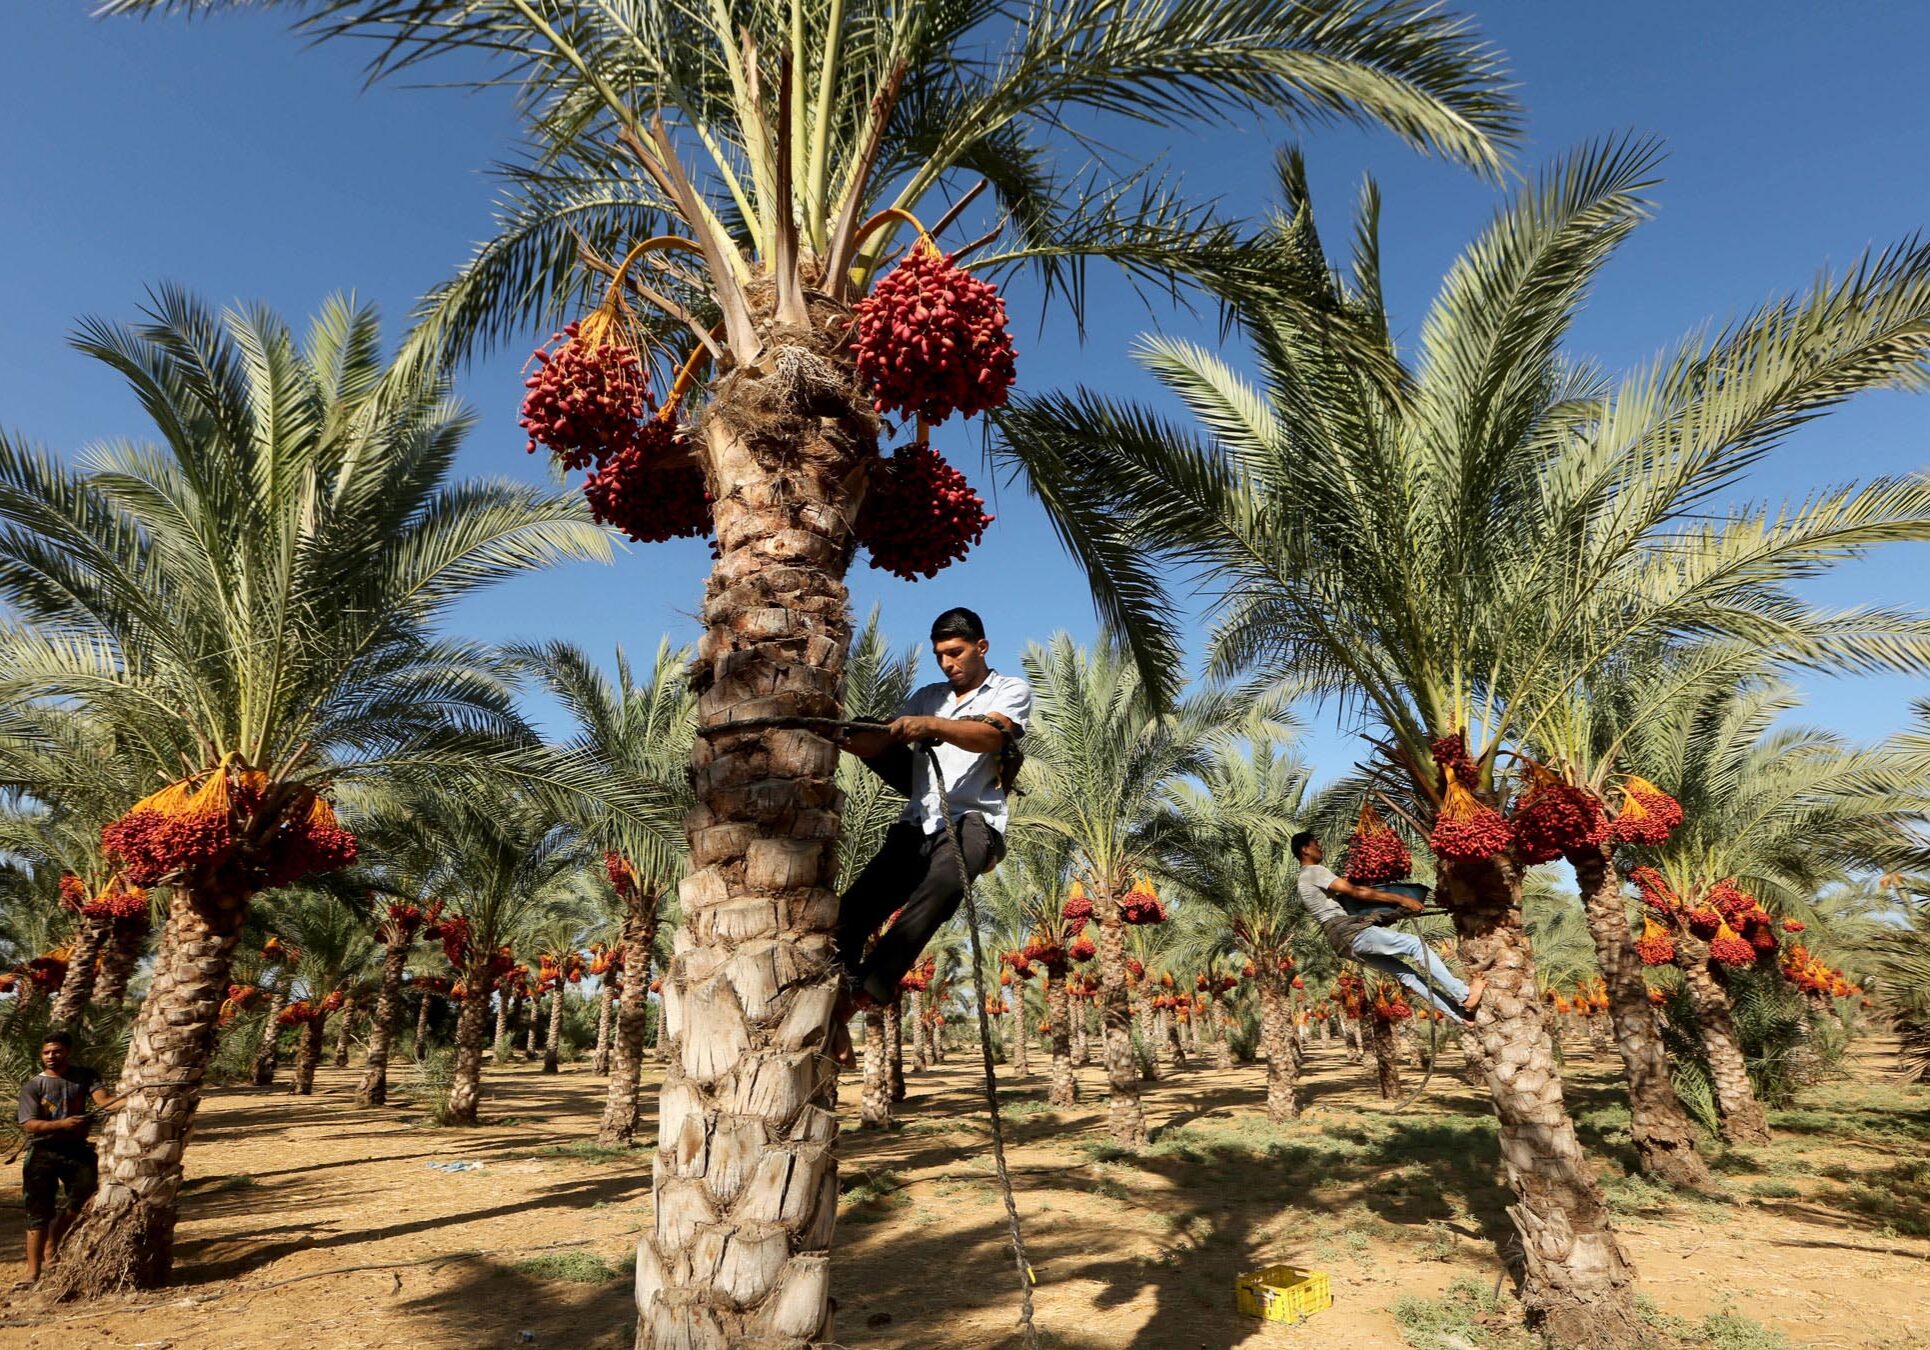 Palestinian farmers picking dates in Gaza